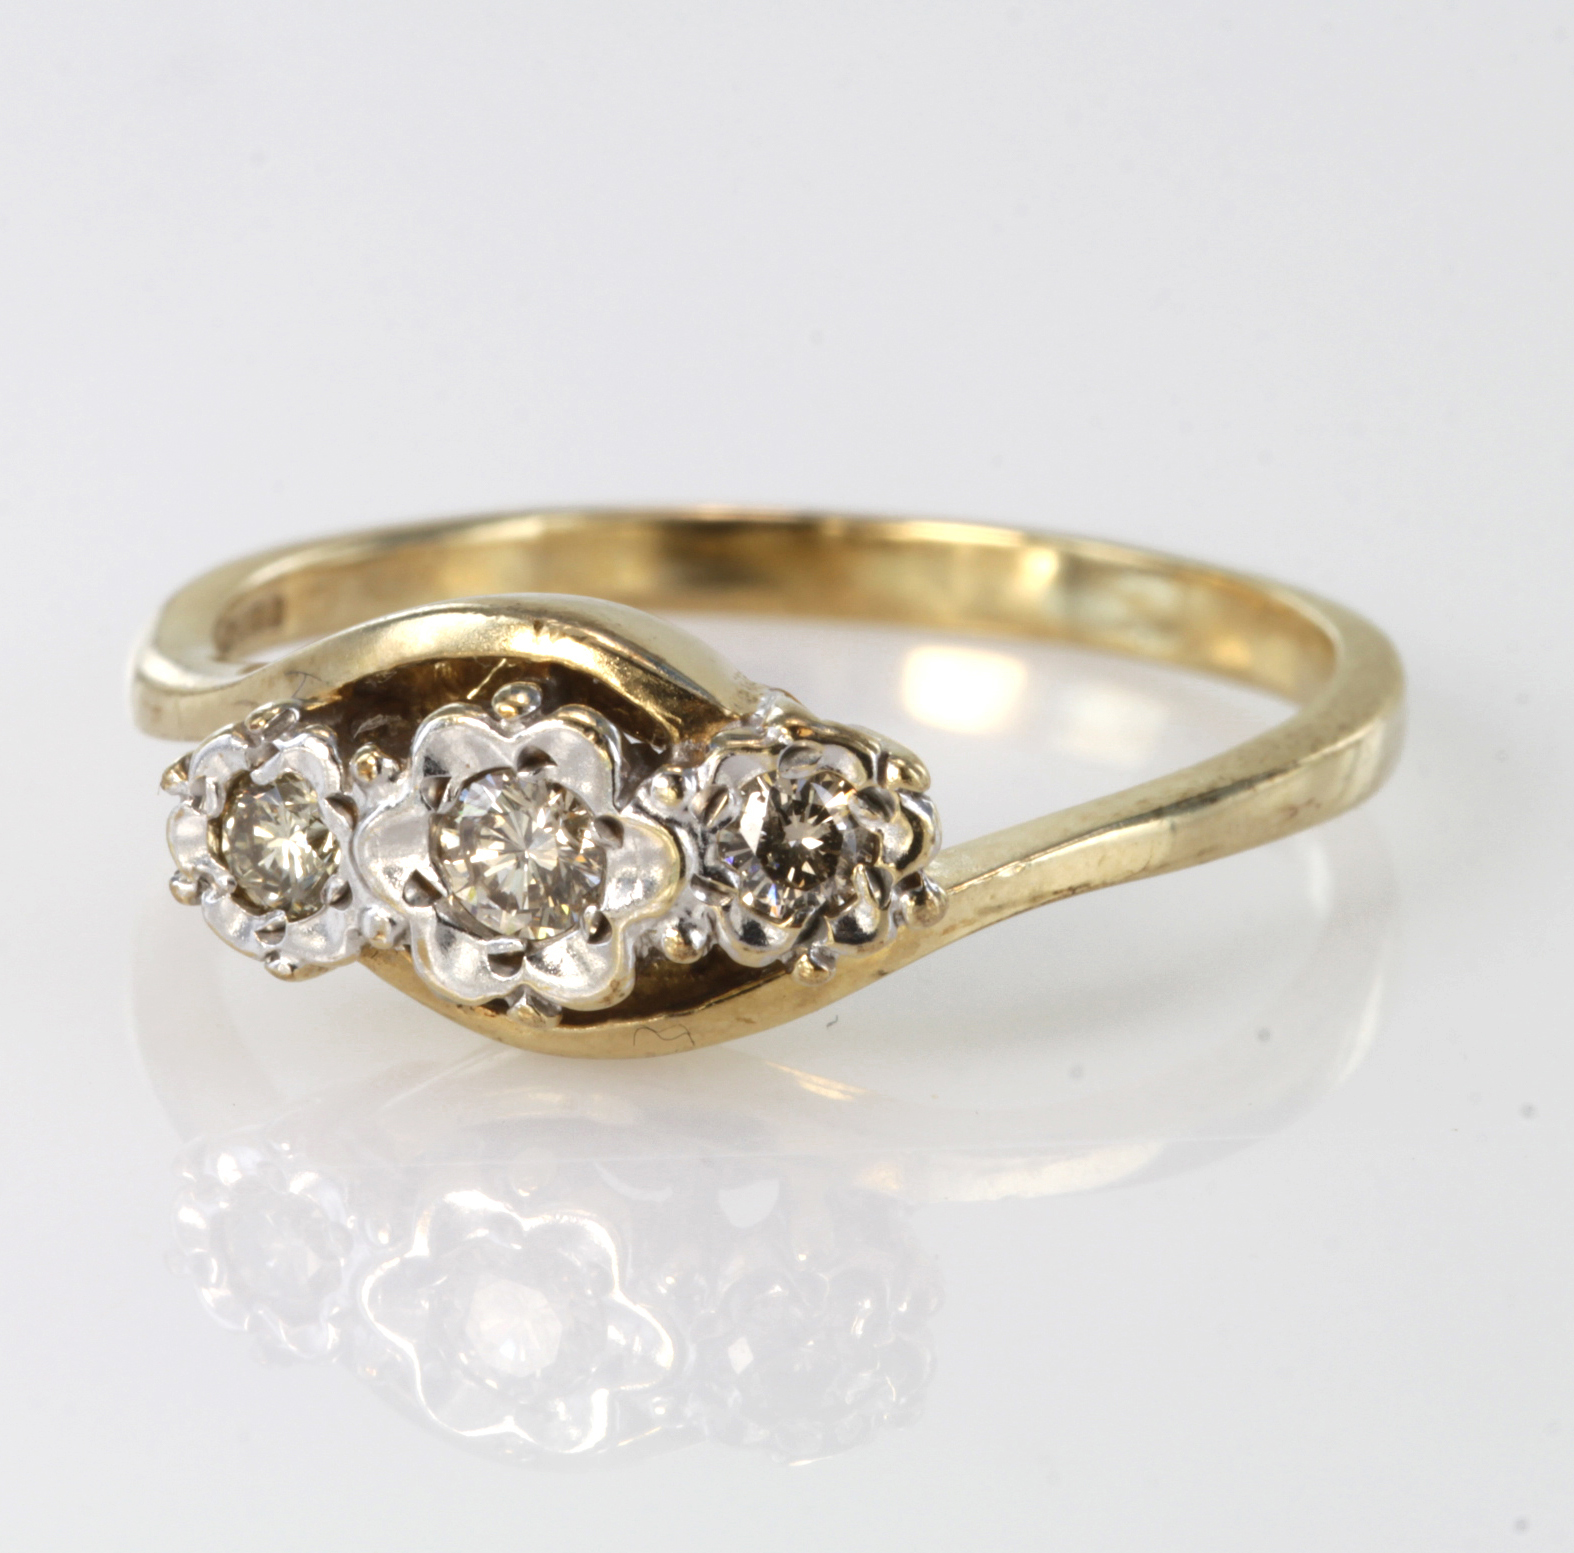 9ct Gold hallmarked three stone Diamond Ring 0.25ct weight size R weight 2.8g